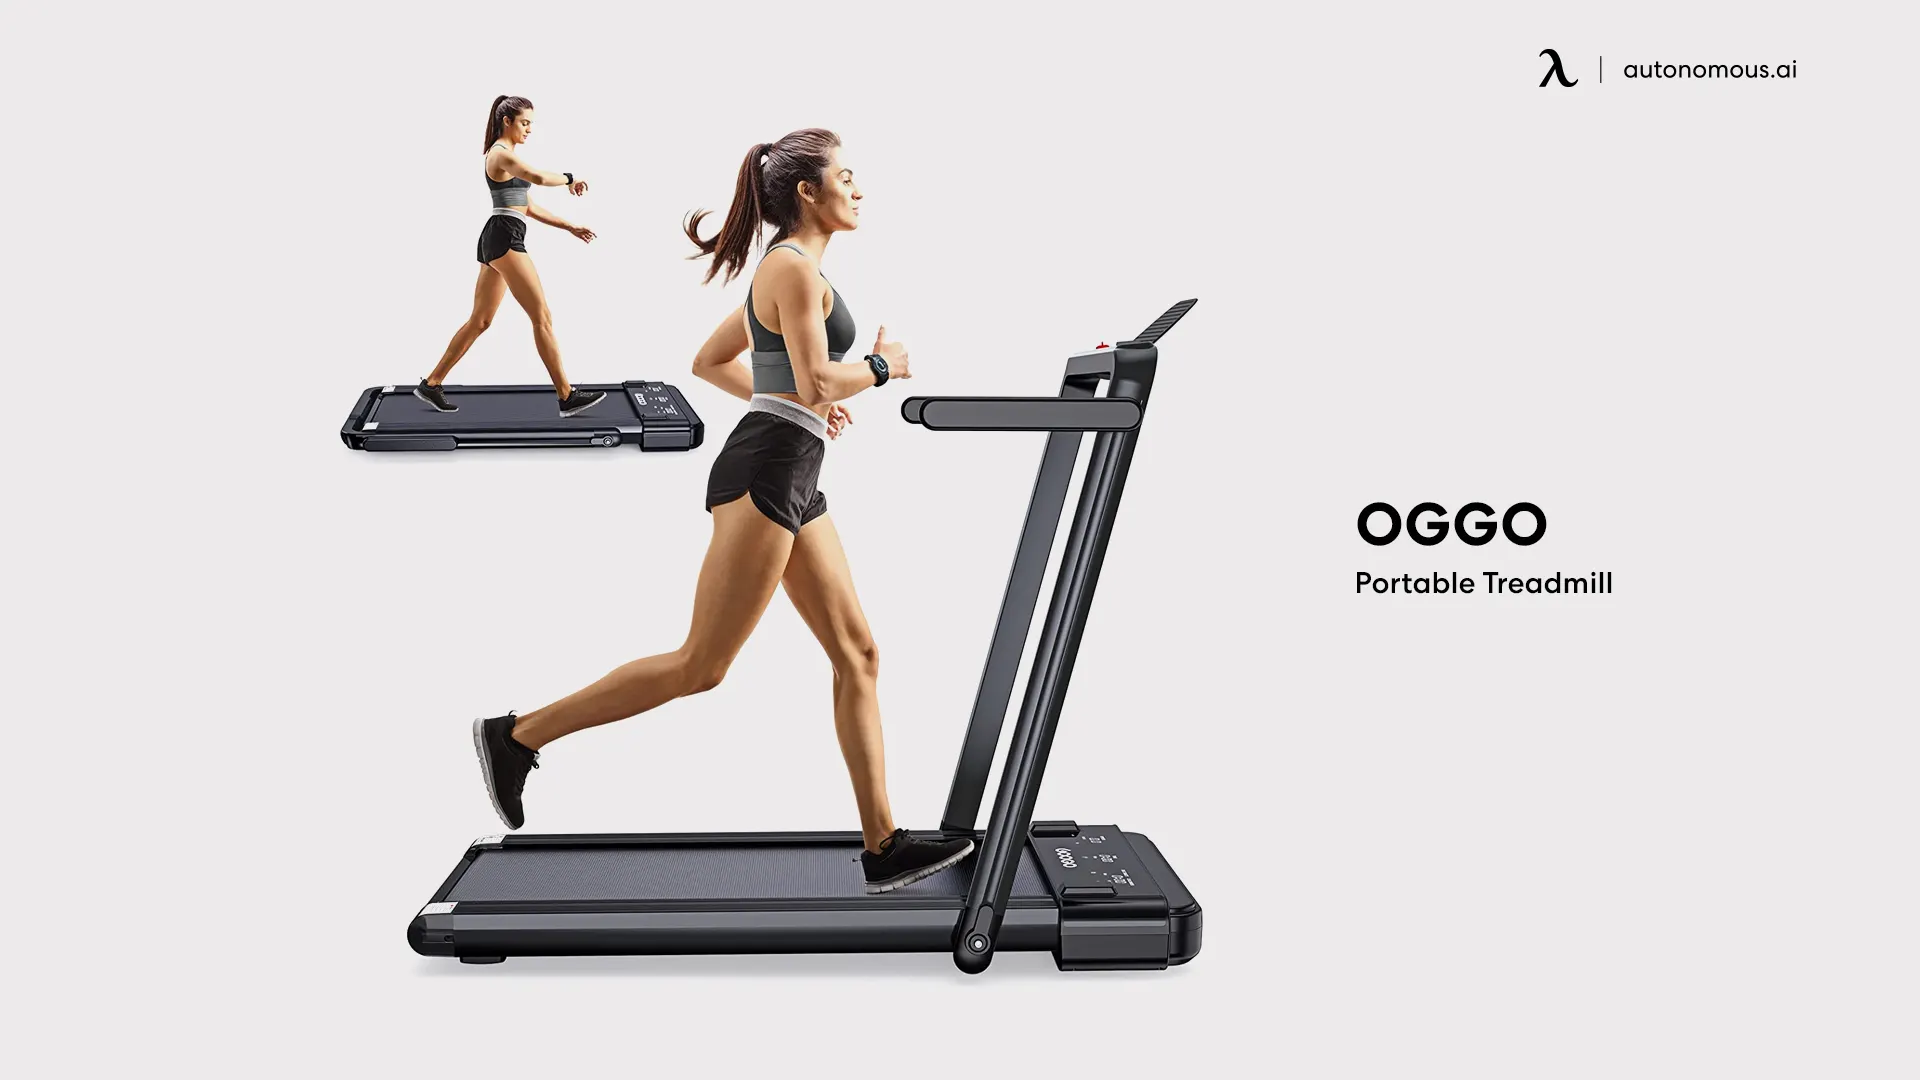 Oggo Portable Treadmill - best foldable treadmill